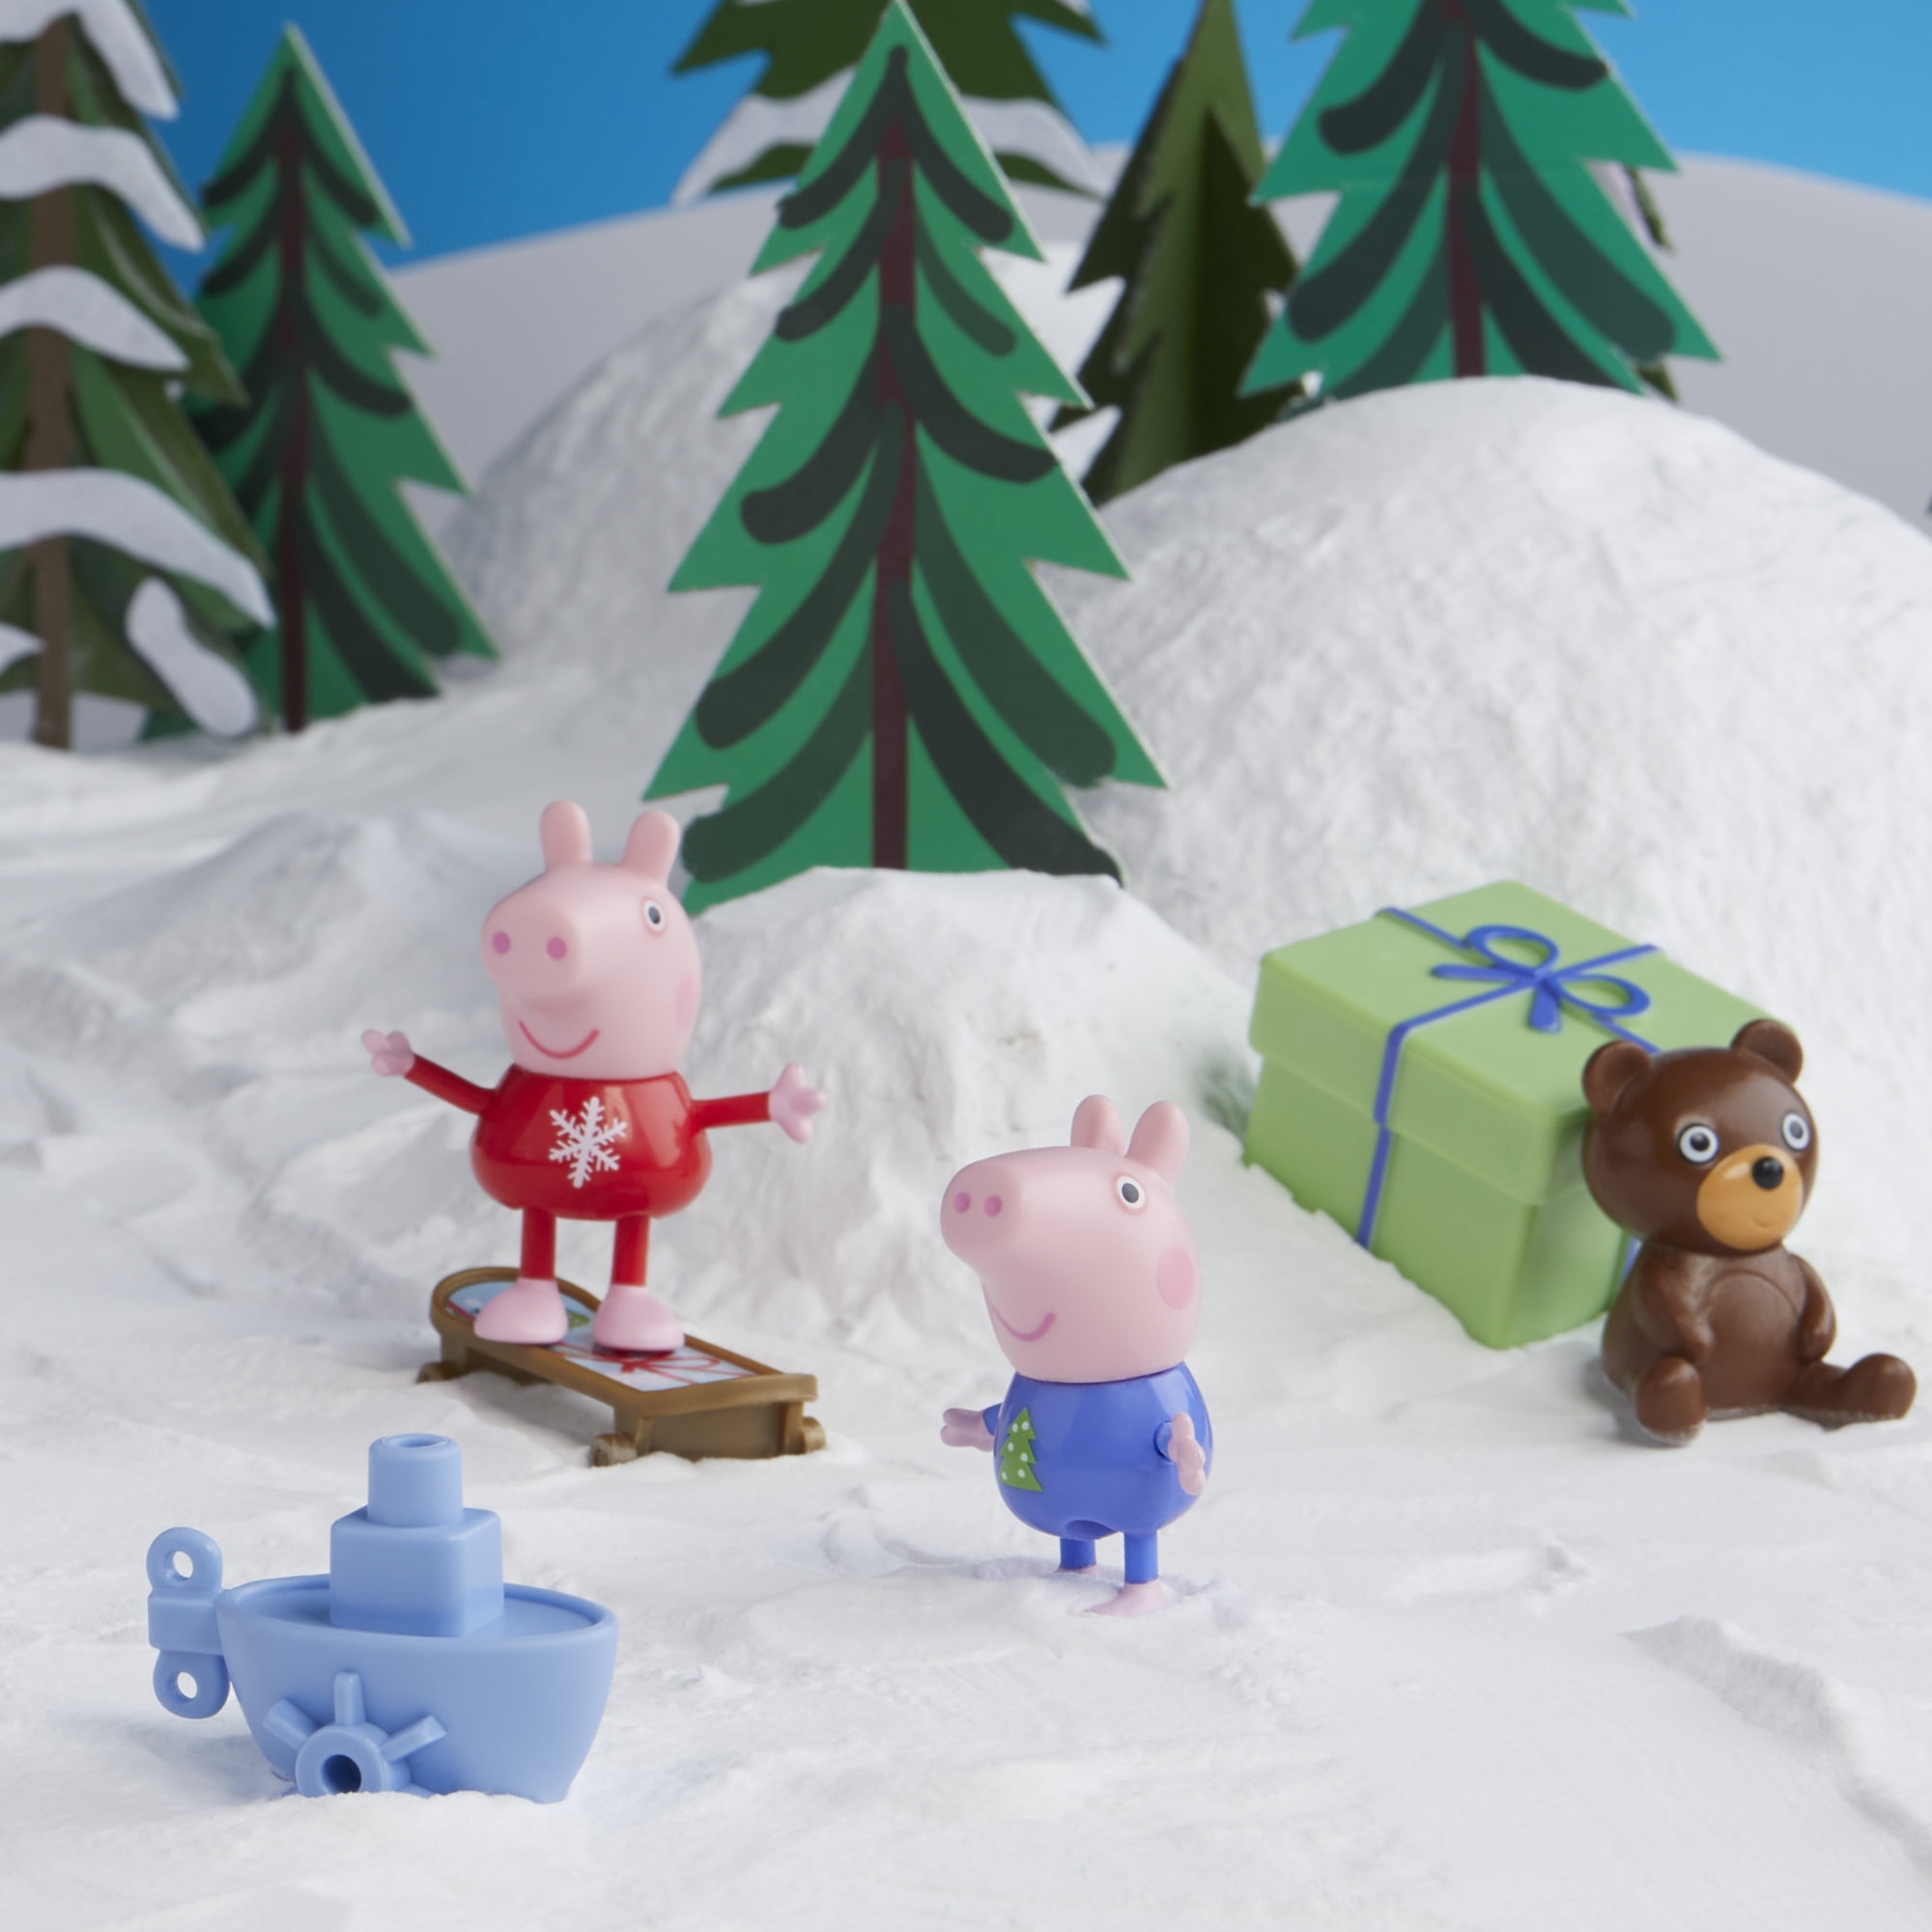 Peppa Pig 2020 Advent Calendar - Available Now!